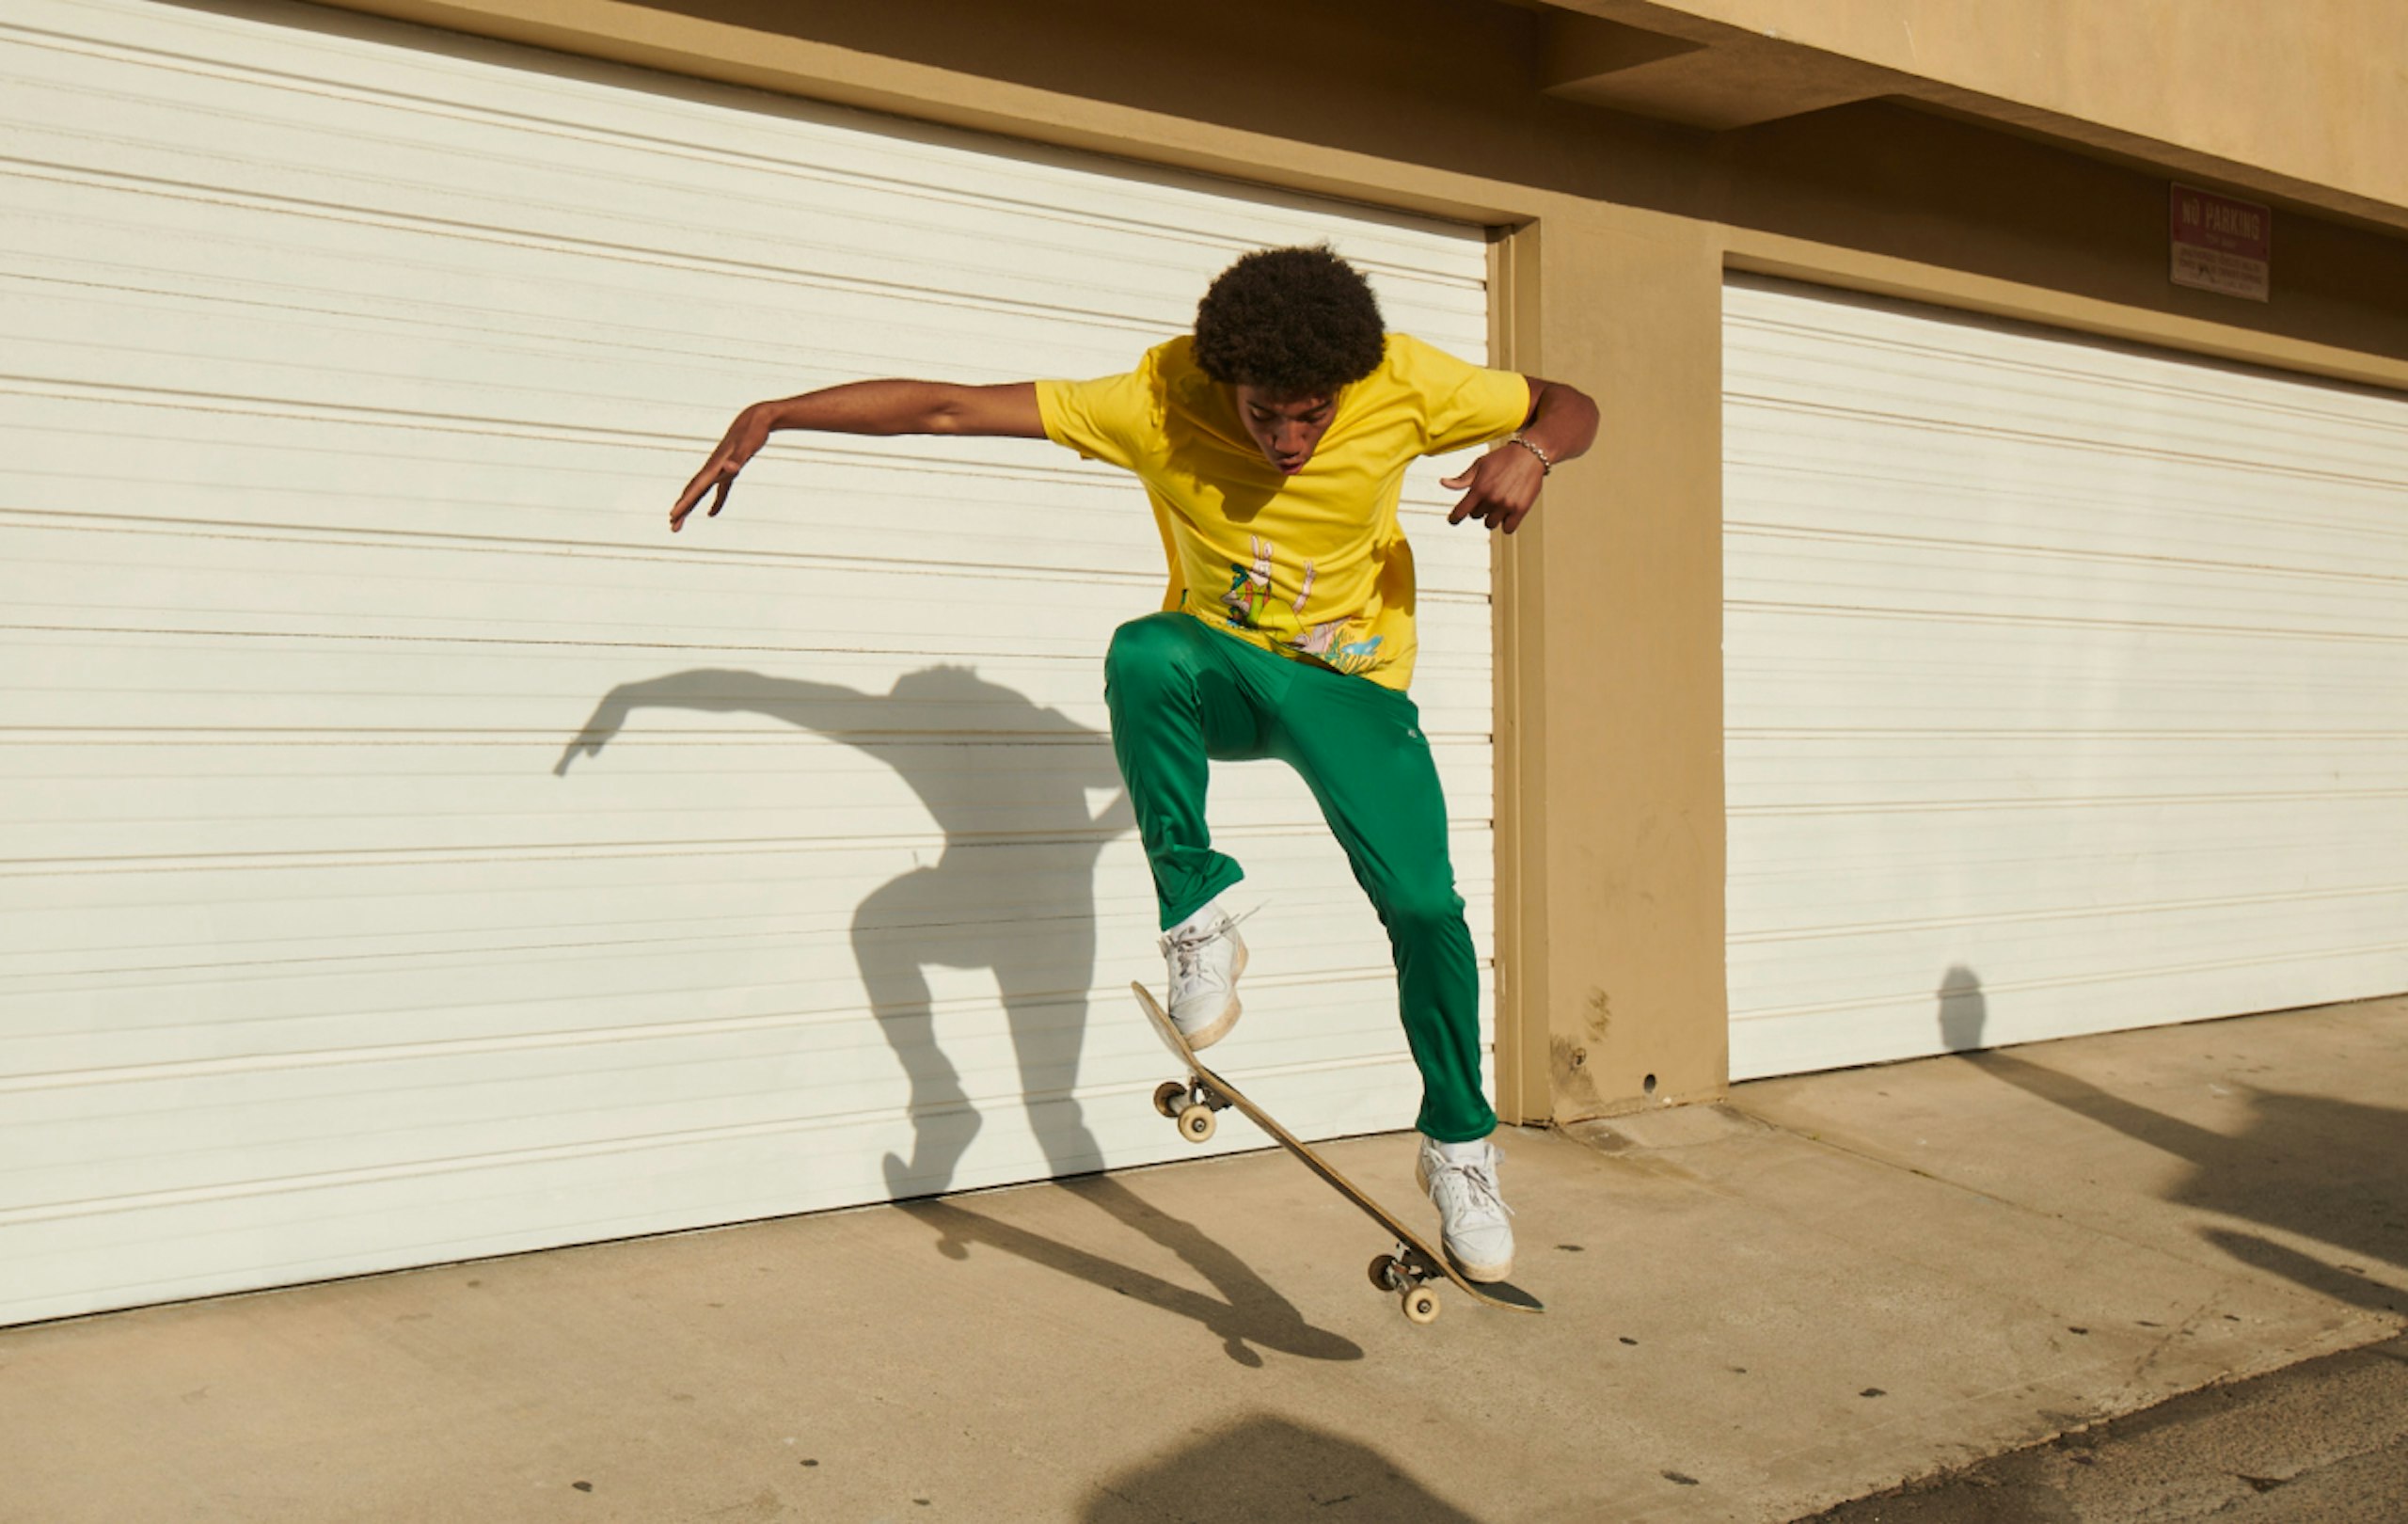 young man doing a kickflip on a skateboard. 